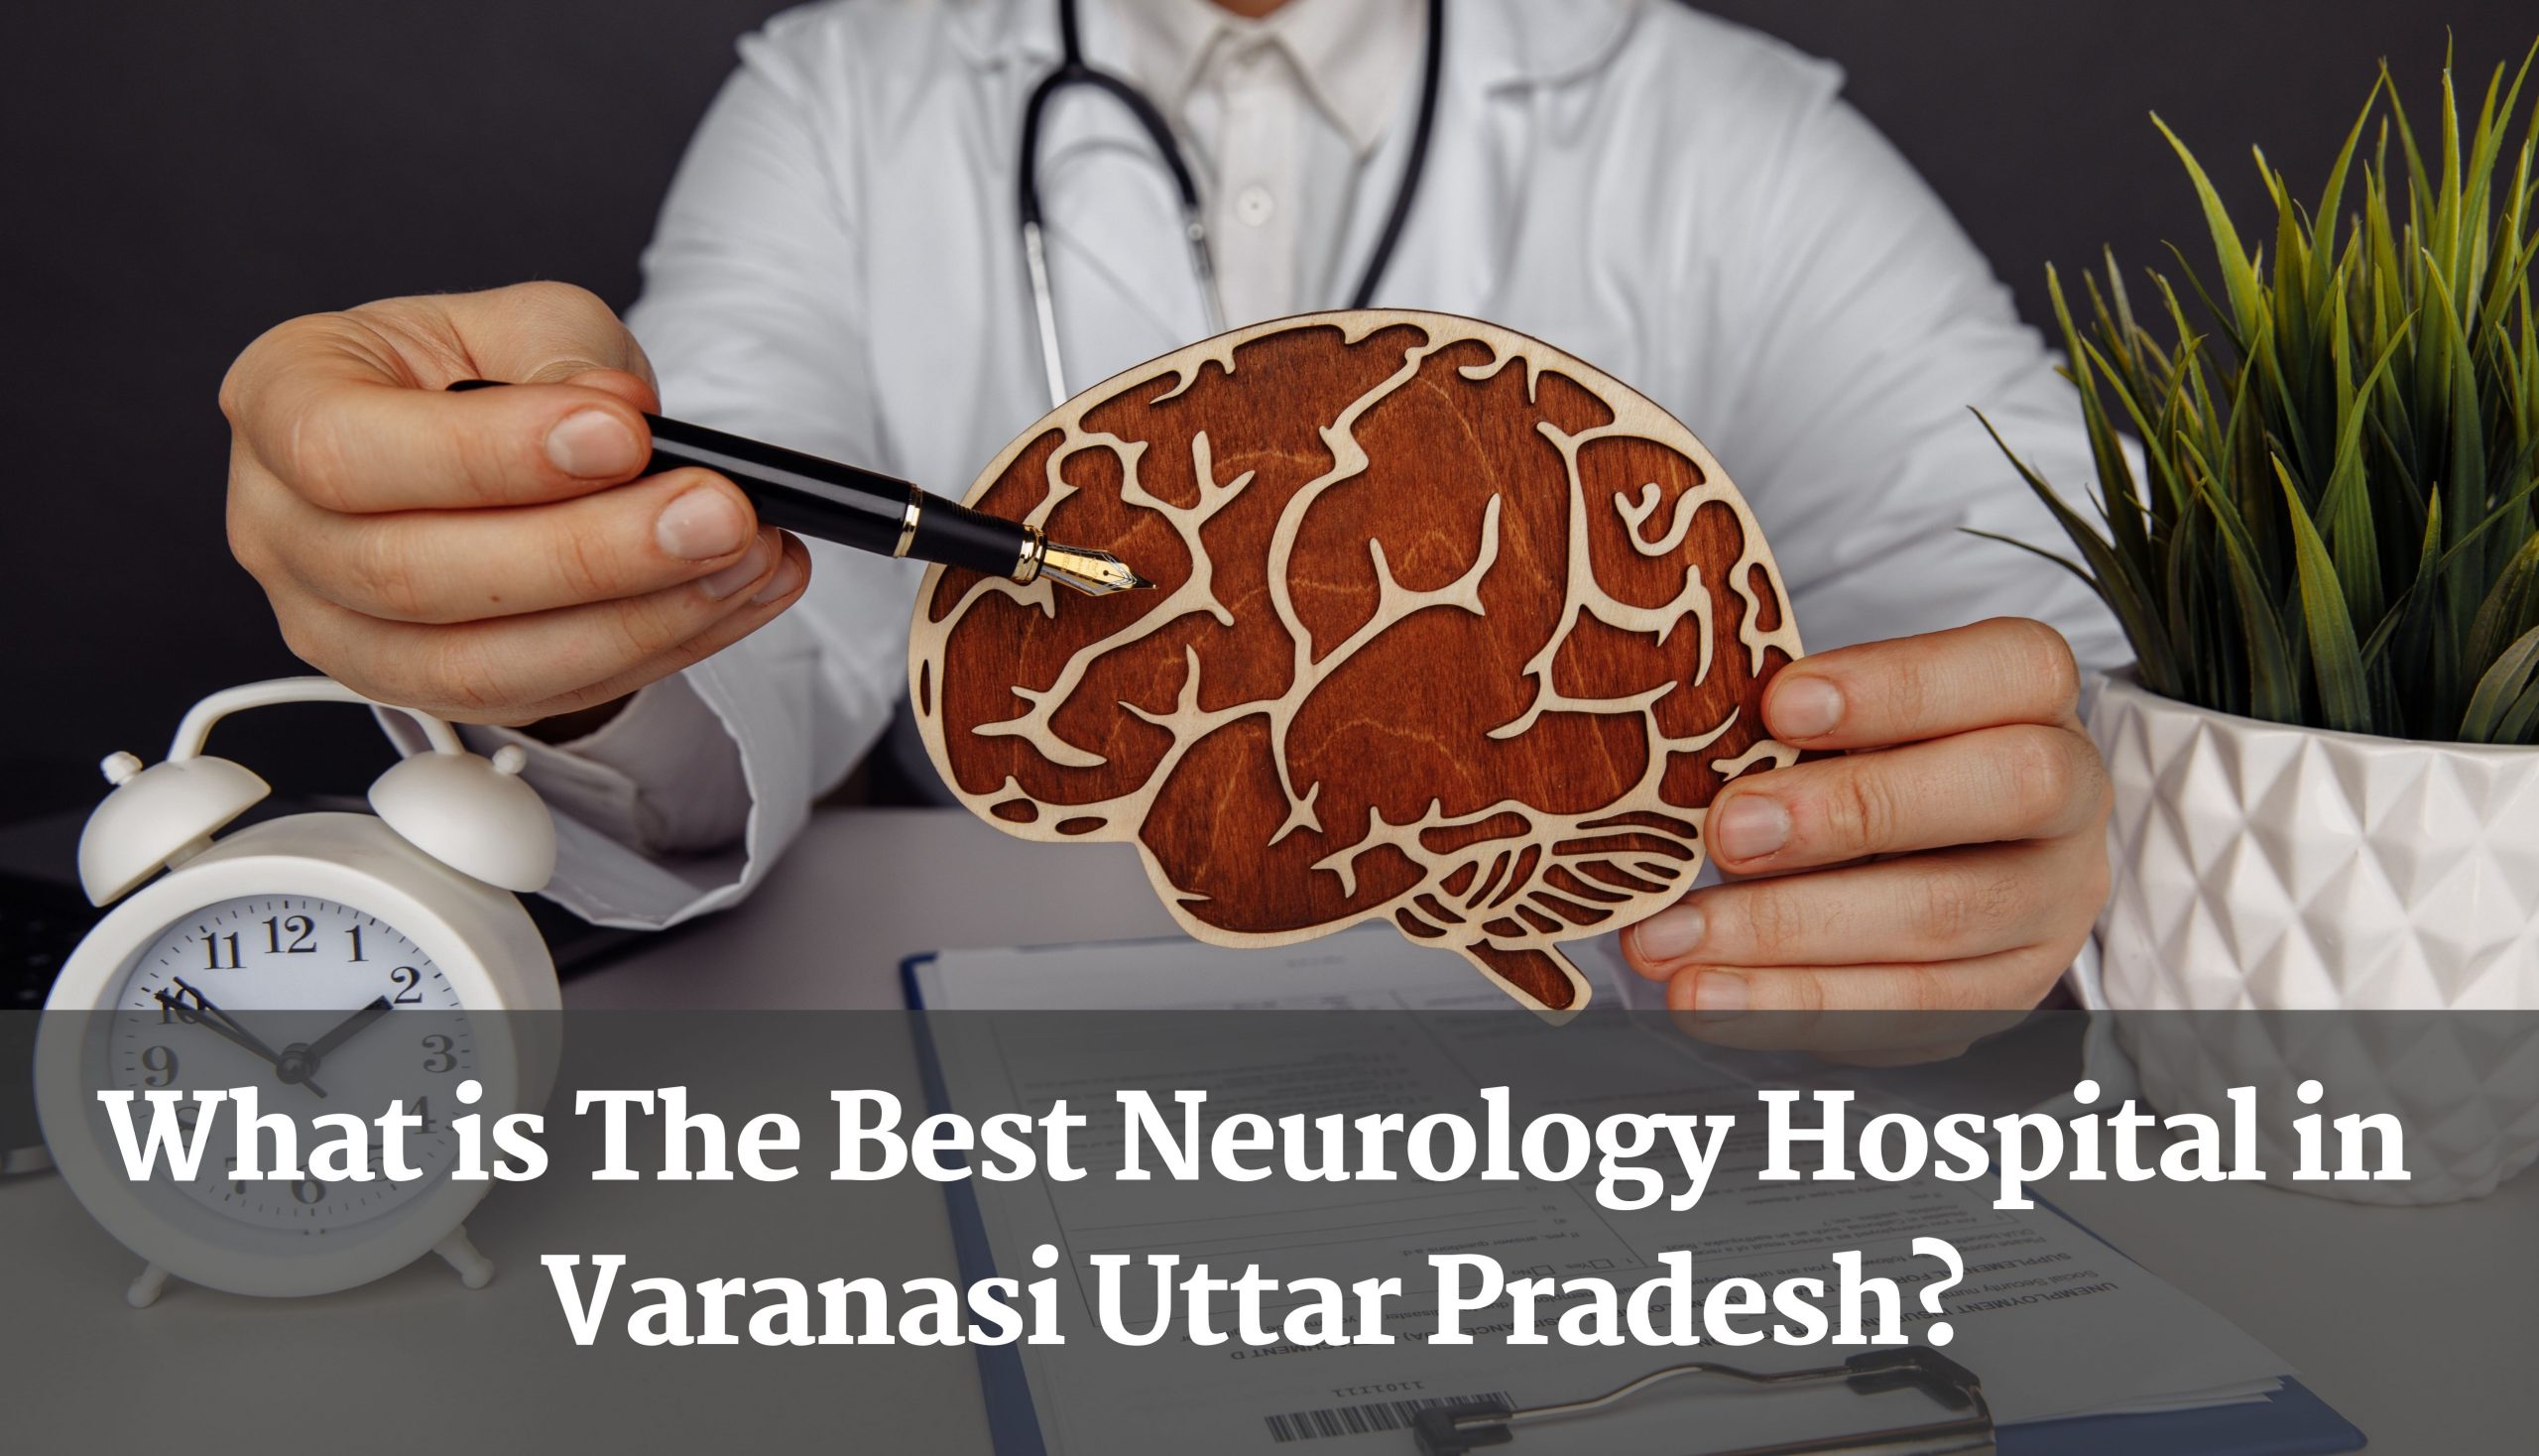 What is The Best Neurology Hospital in Varanasi Uttar Pradesh